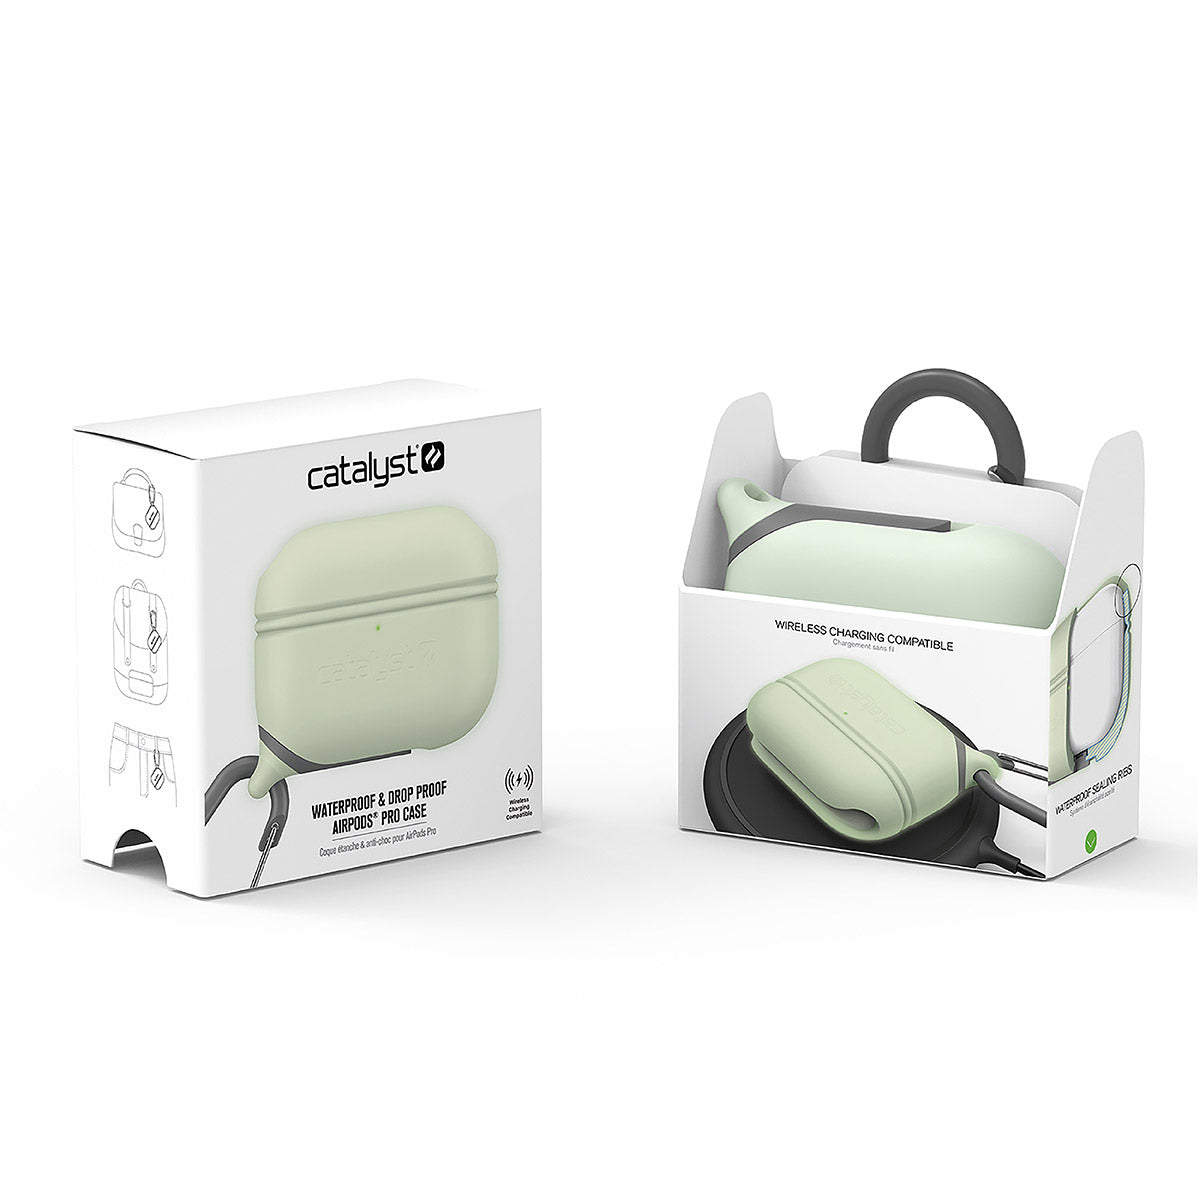 catalyst airpods pro gen 2 1 waterproof case carabiner special edition glow in the dark packaging